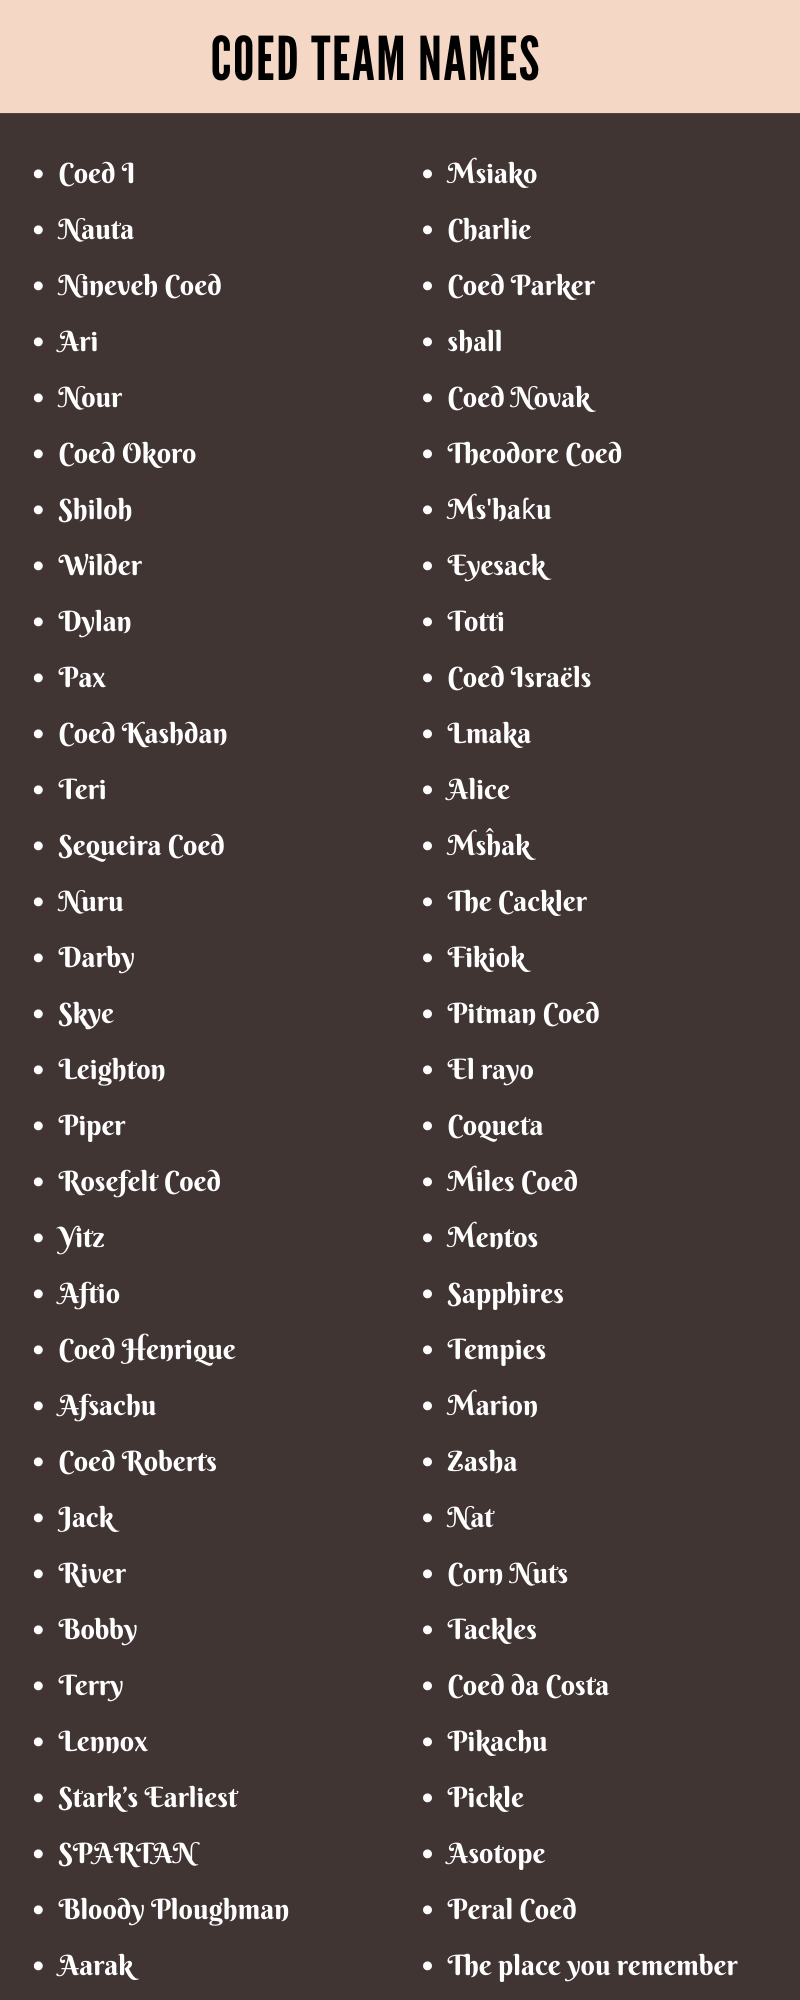 Coed Team Names